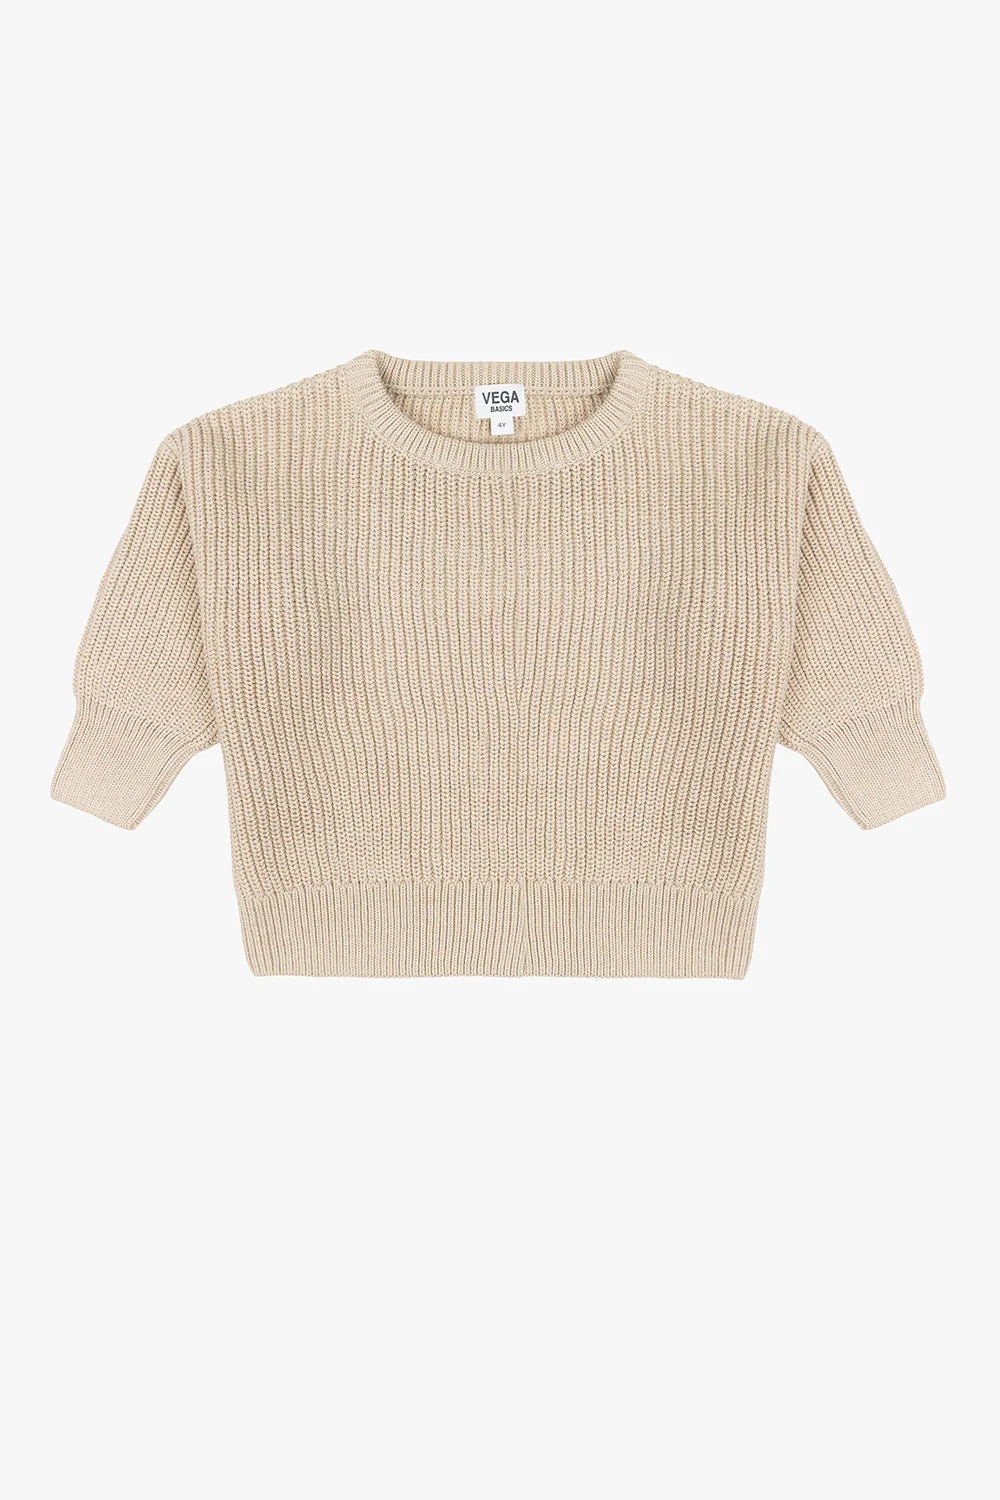 Vega Basics - cordero sweater - speckled almond